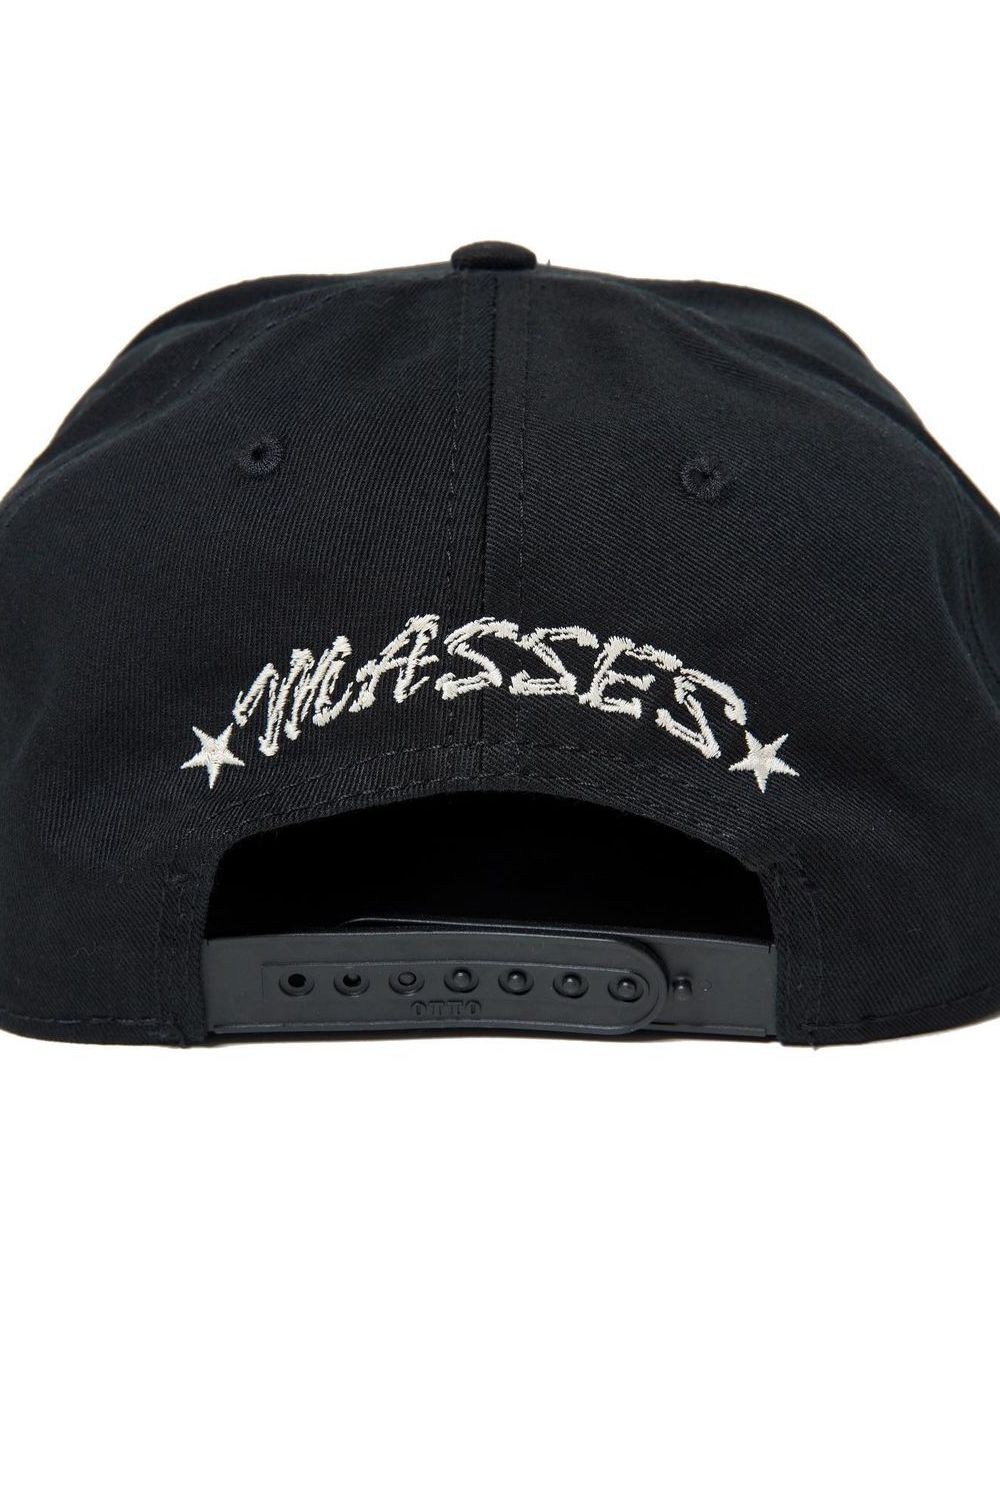 m&m エムアンドエム ×MASSES 80'S CAP マシス ベースボールキャップ 帽子 レッド